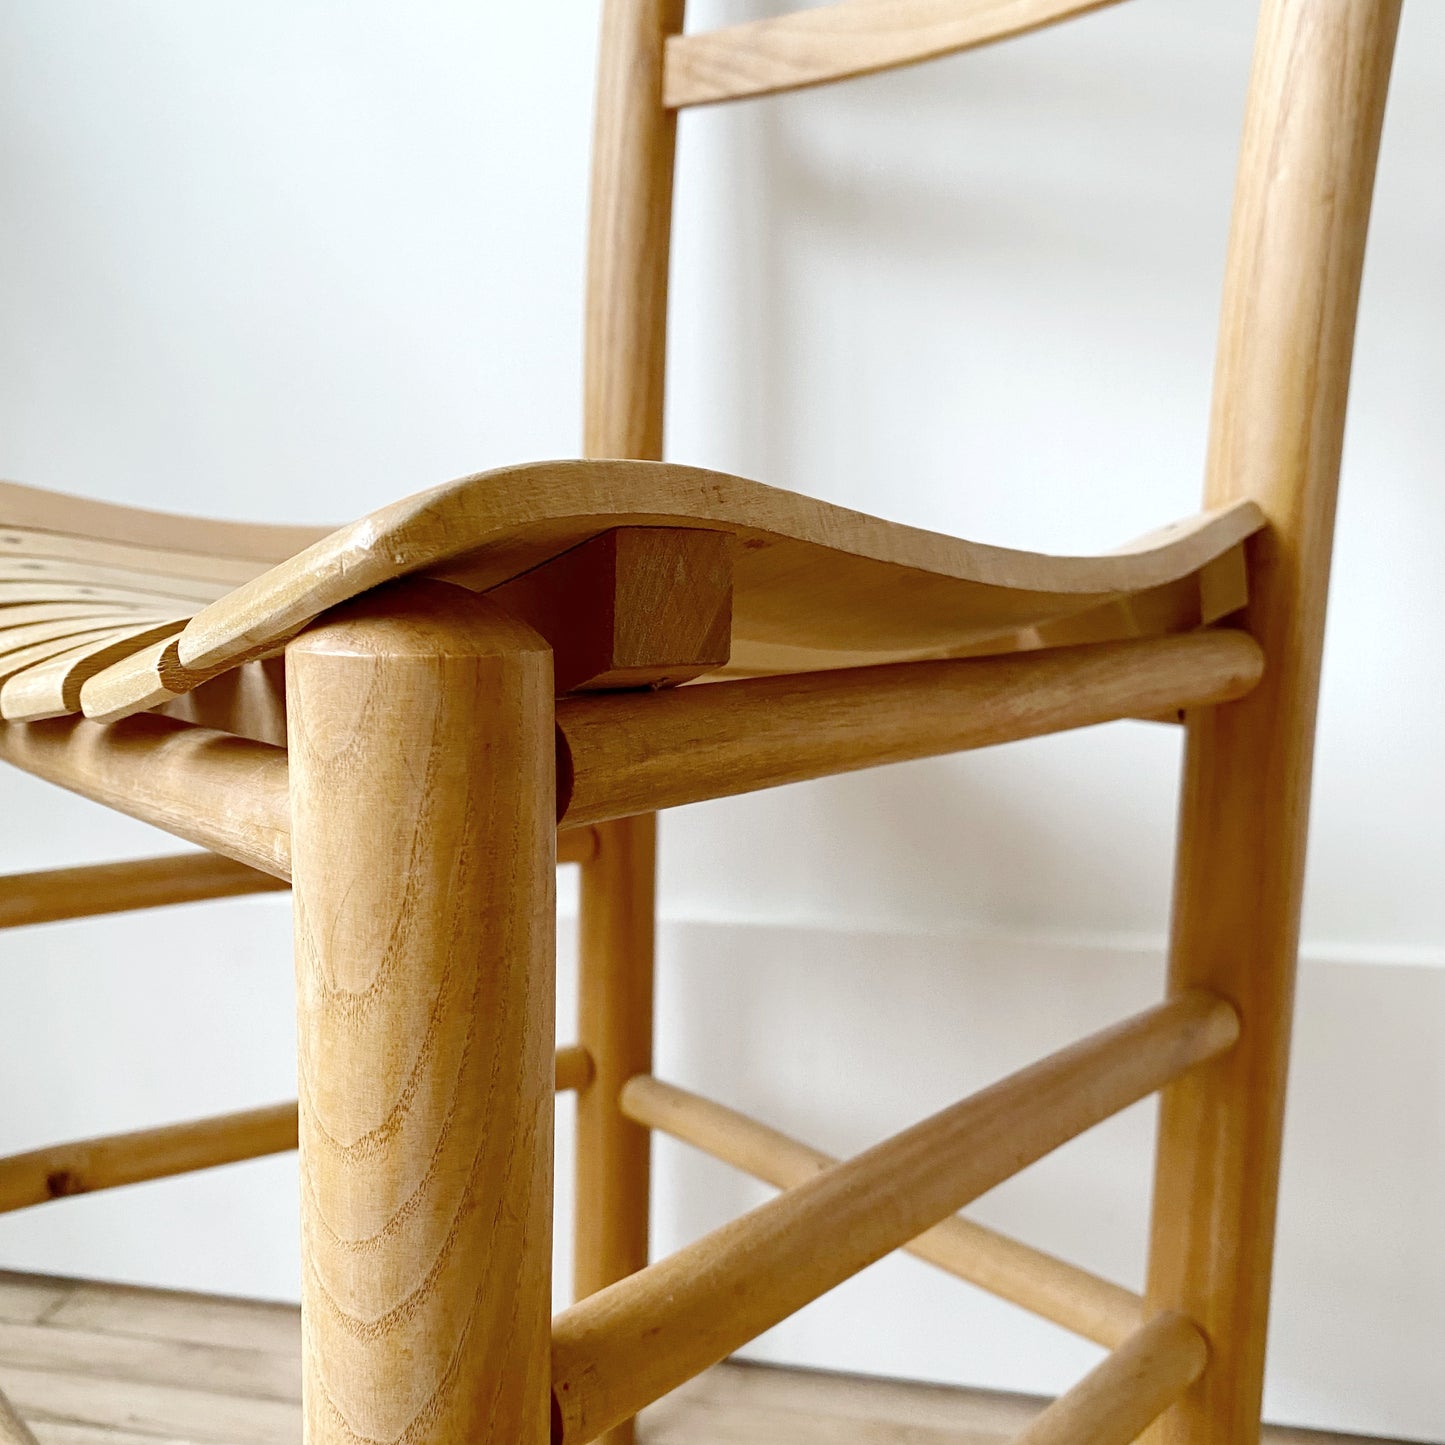 Vintage Wooden Slat Chair